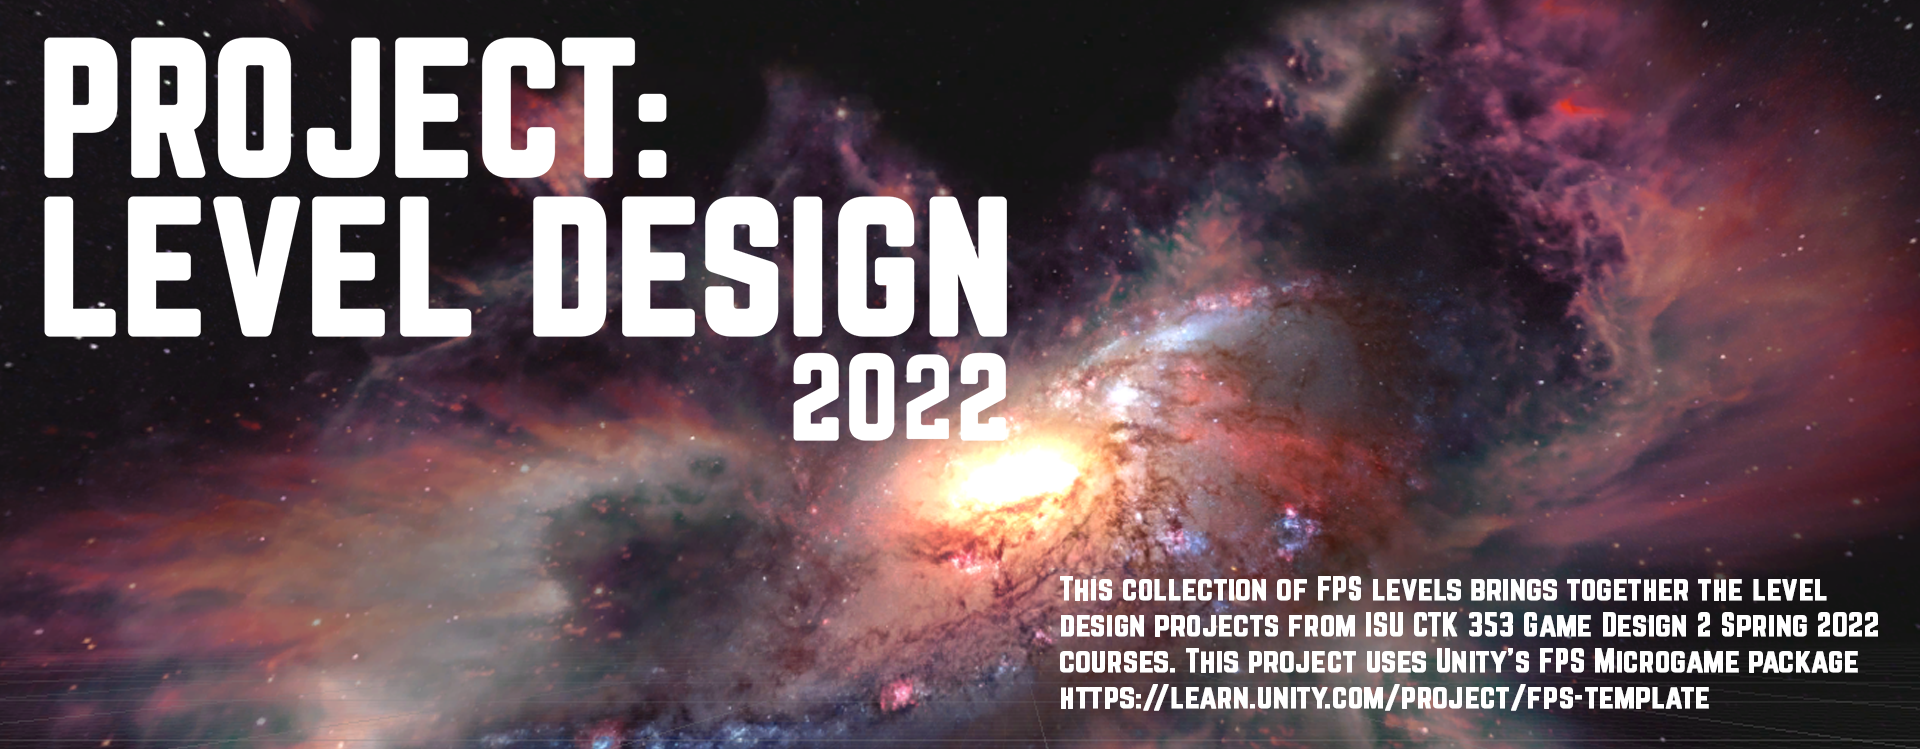 Project: Level Design 2022